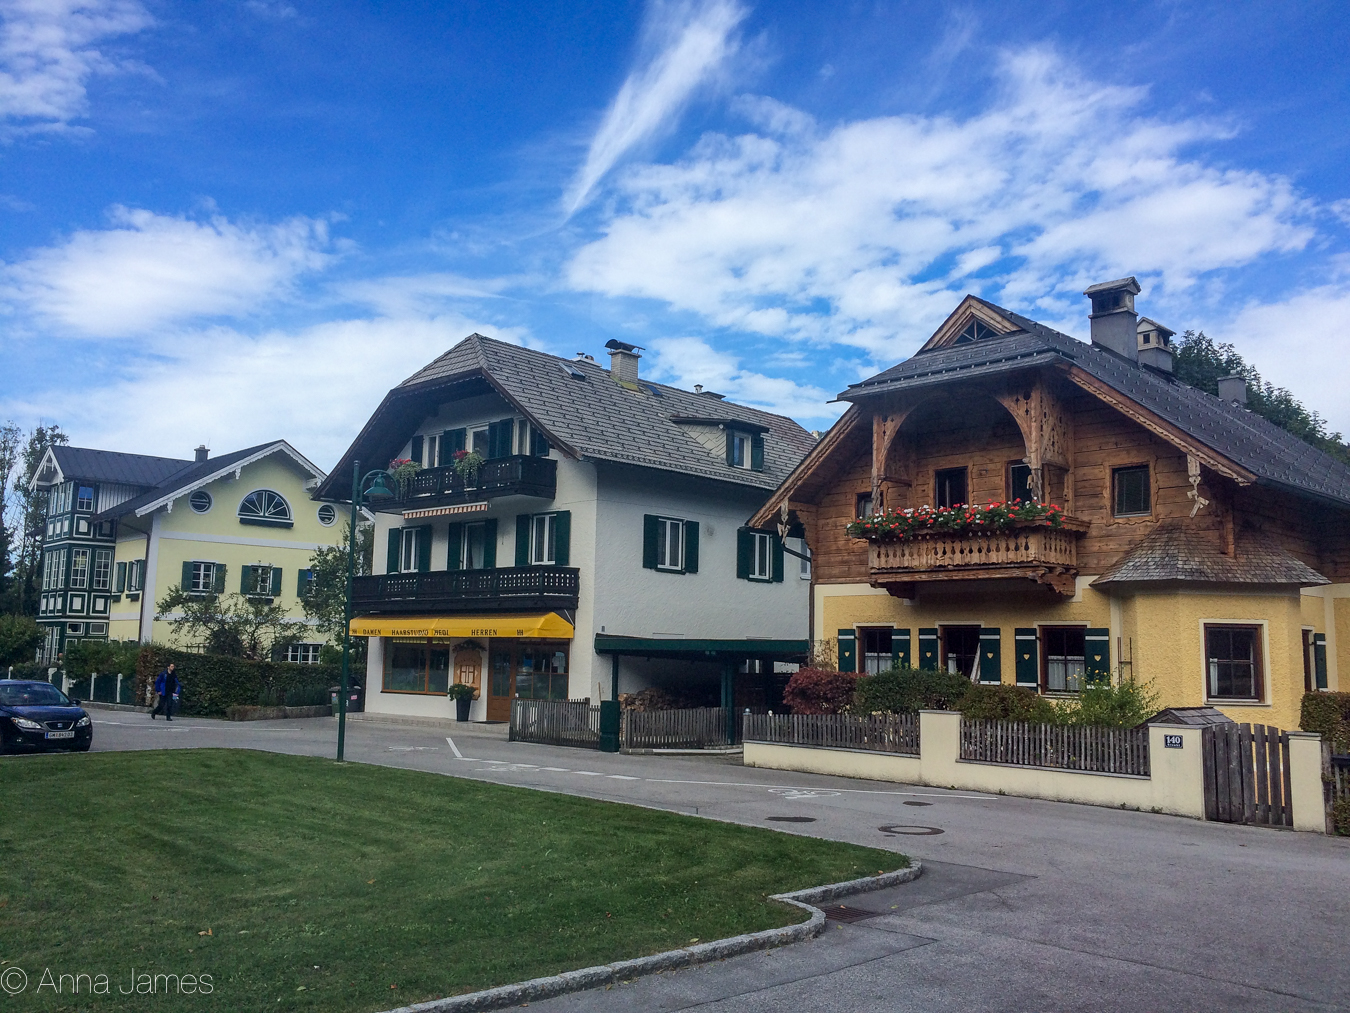 A charming village on the way to Hallstatt